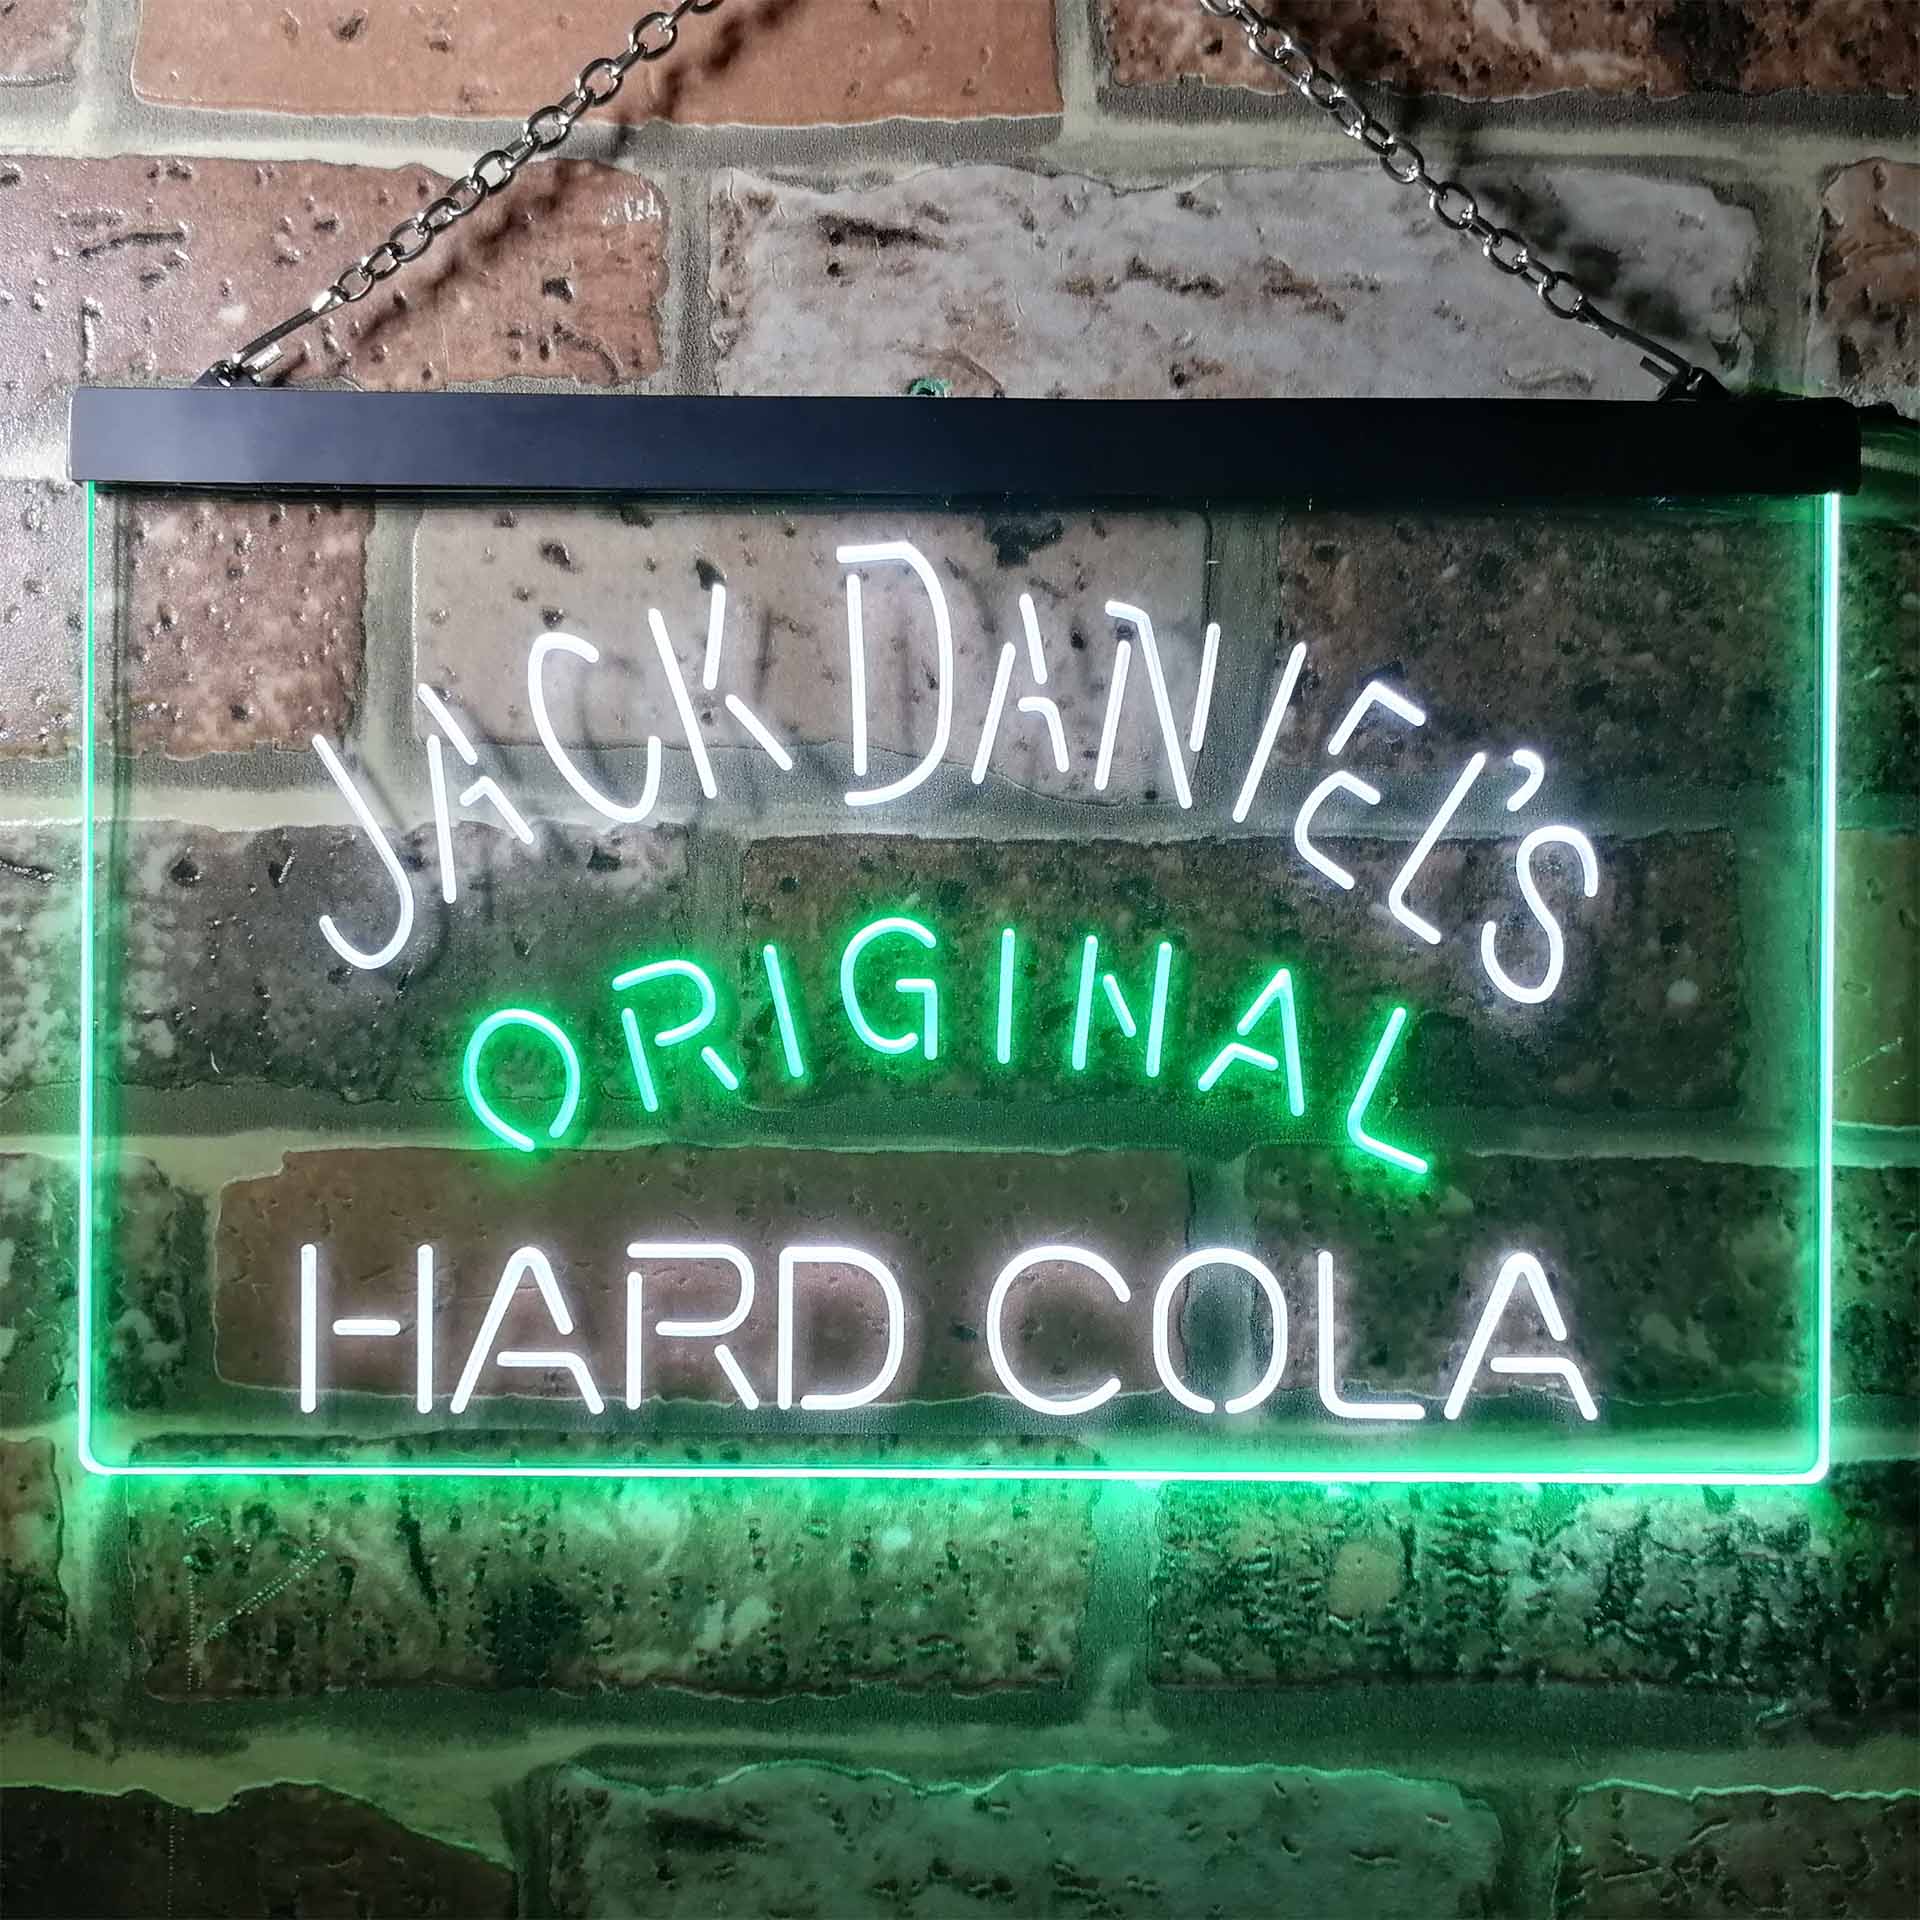 Jack Daniel's Original Hard Cola Neon-Like LED Sign